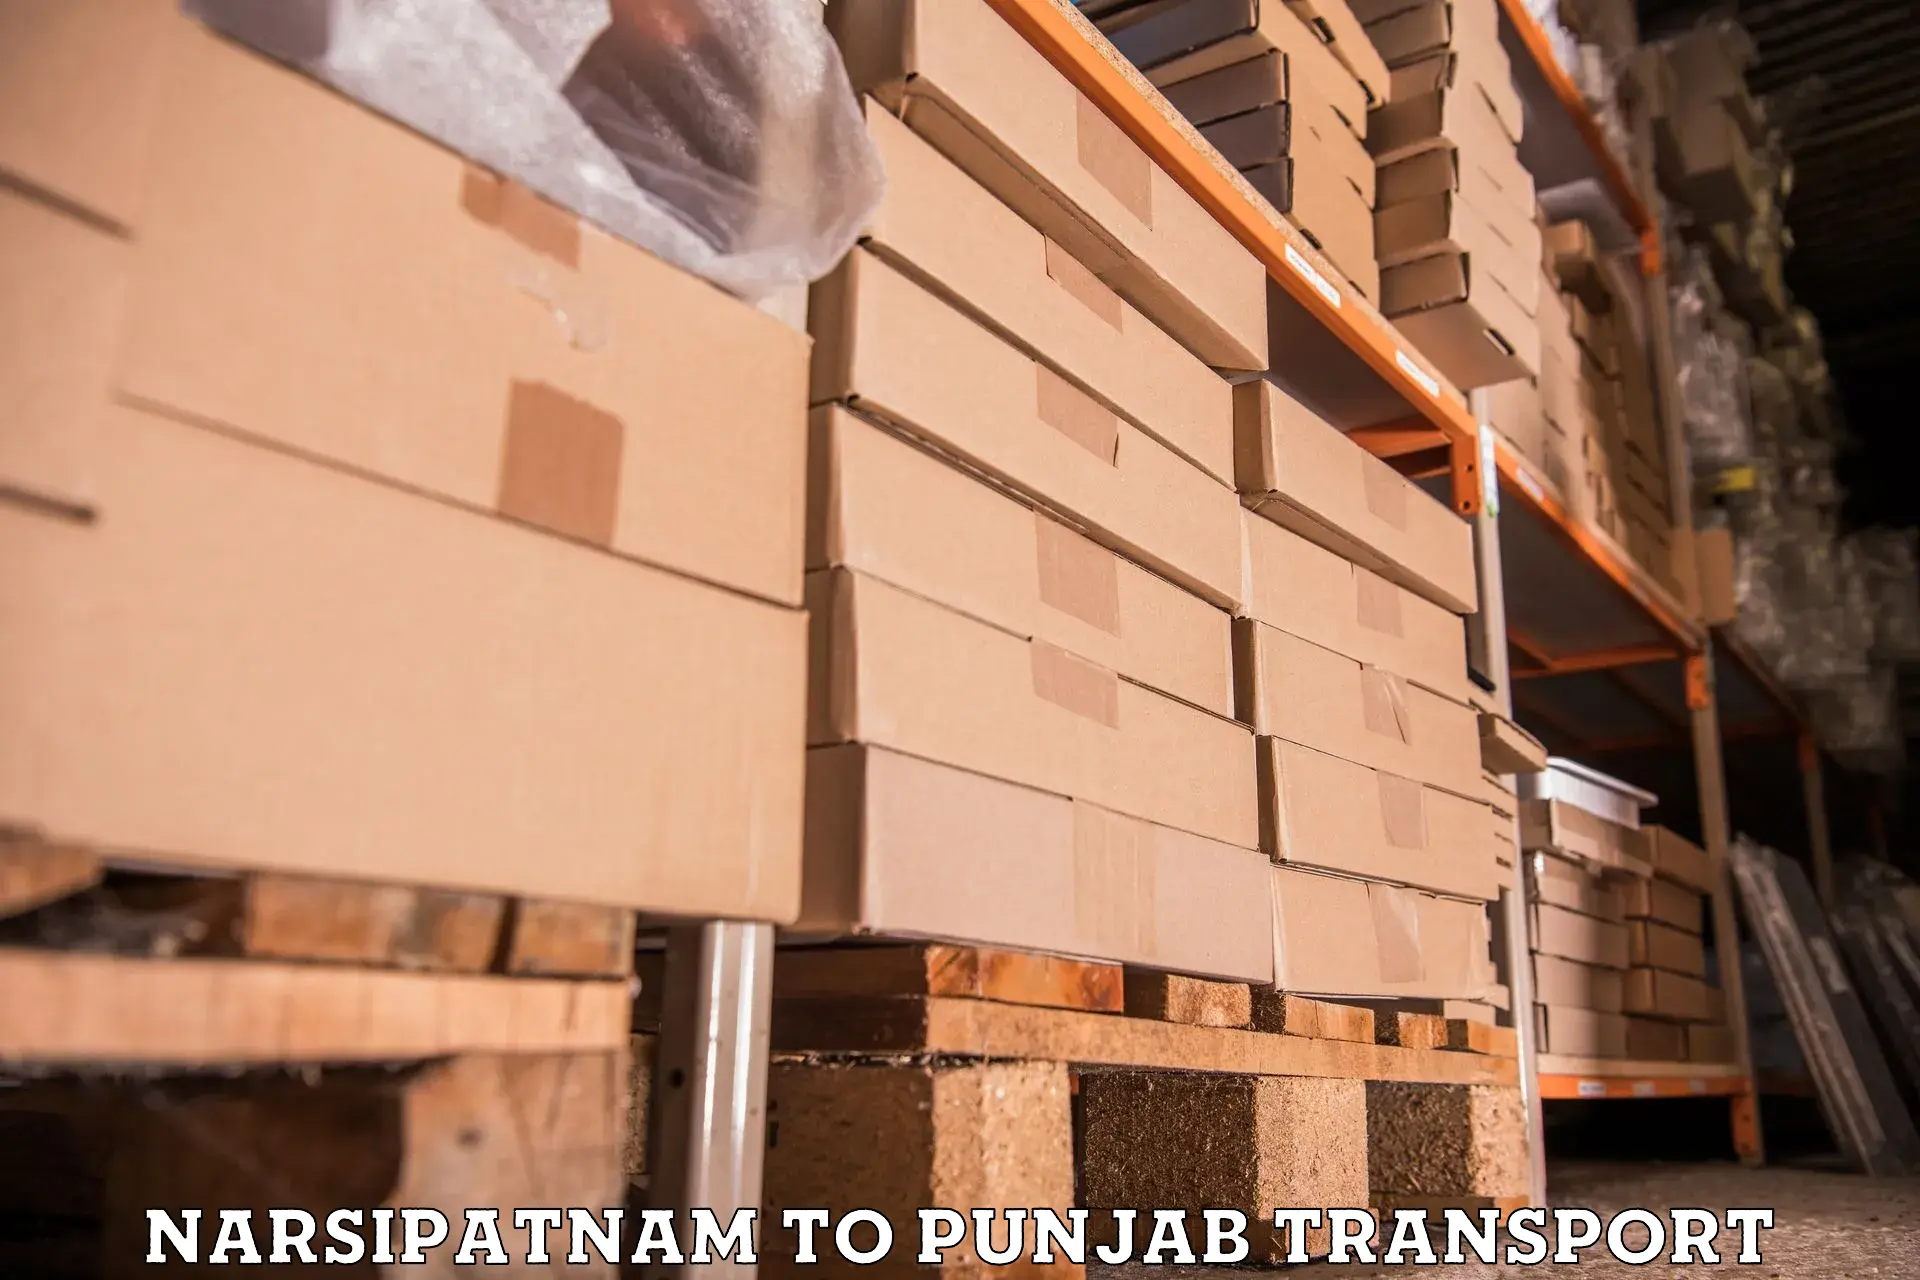 Container transport service Narsipatnam to Punjab